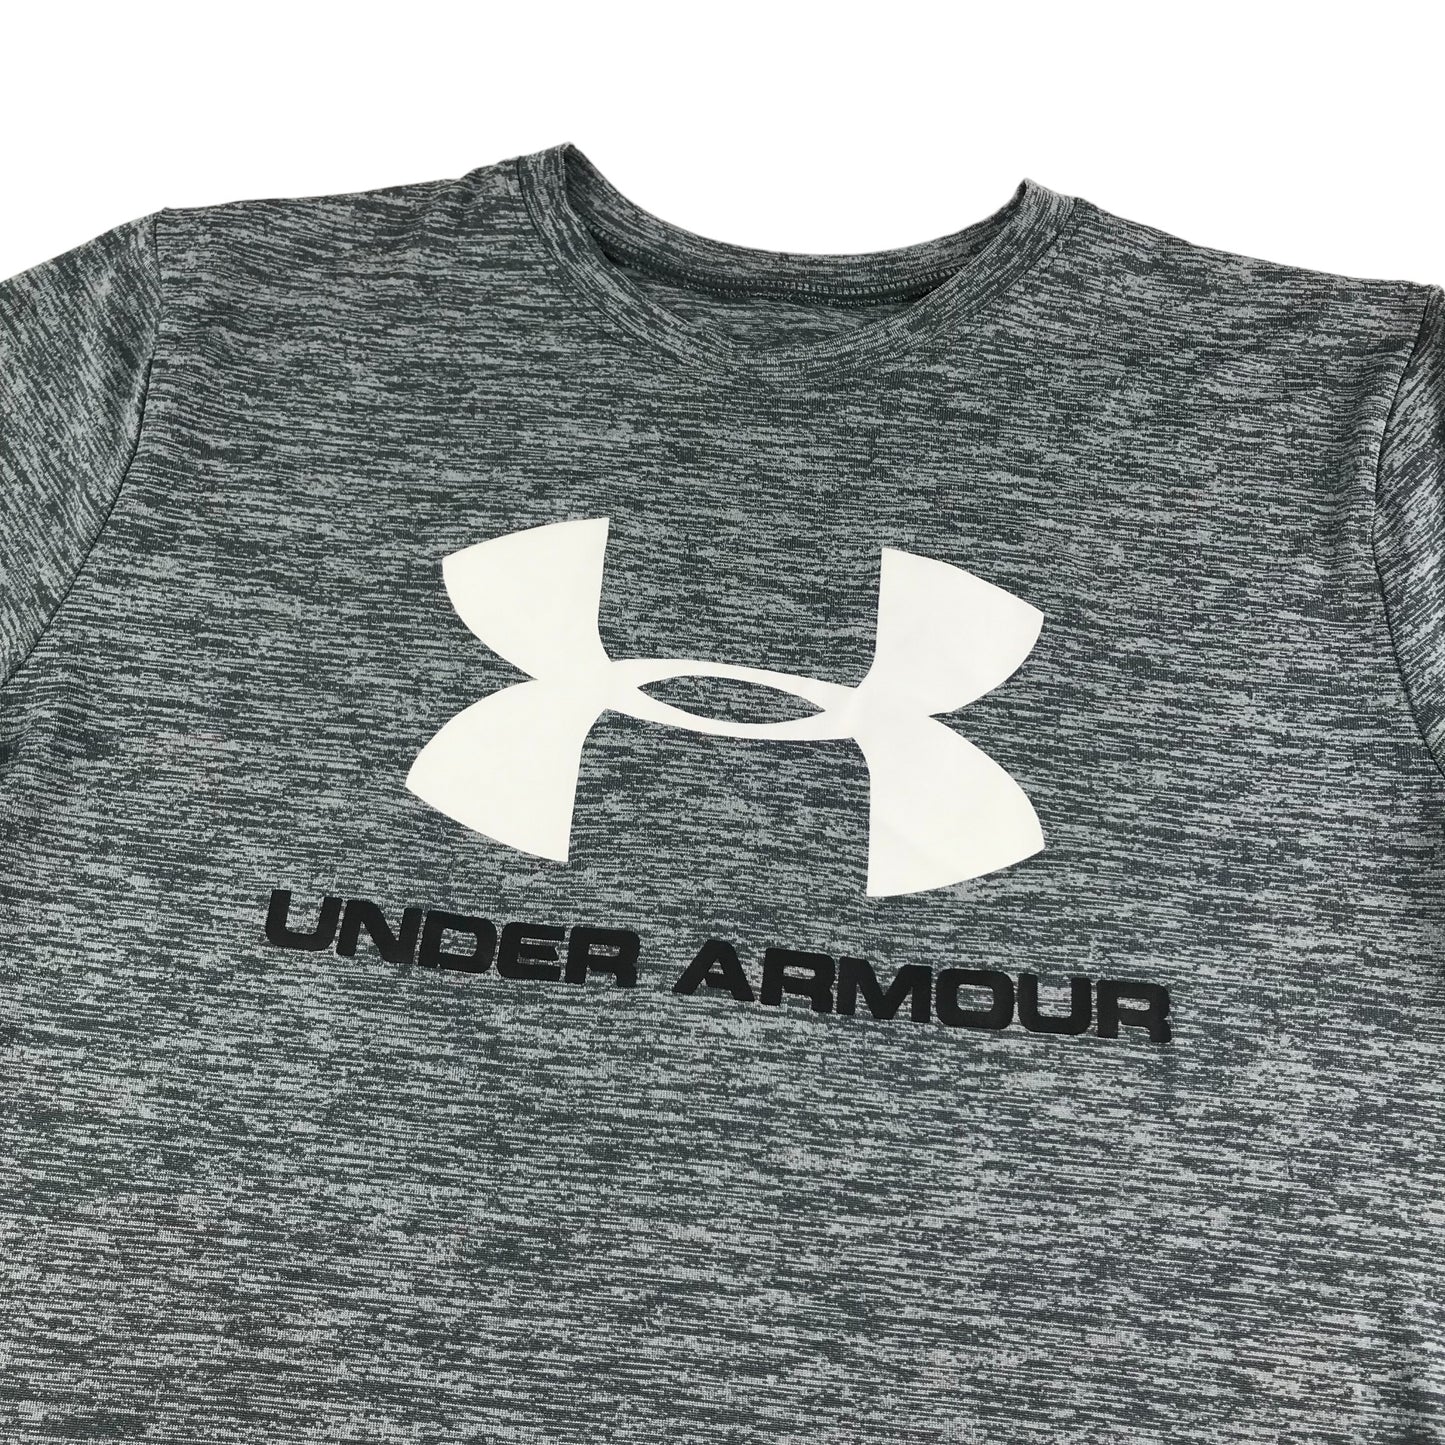 Under Armour Sports Top Age 11-12 Grey Heatgear Distressed Pattern Short Sleeve T-shirt